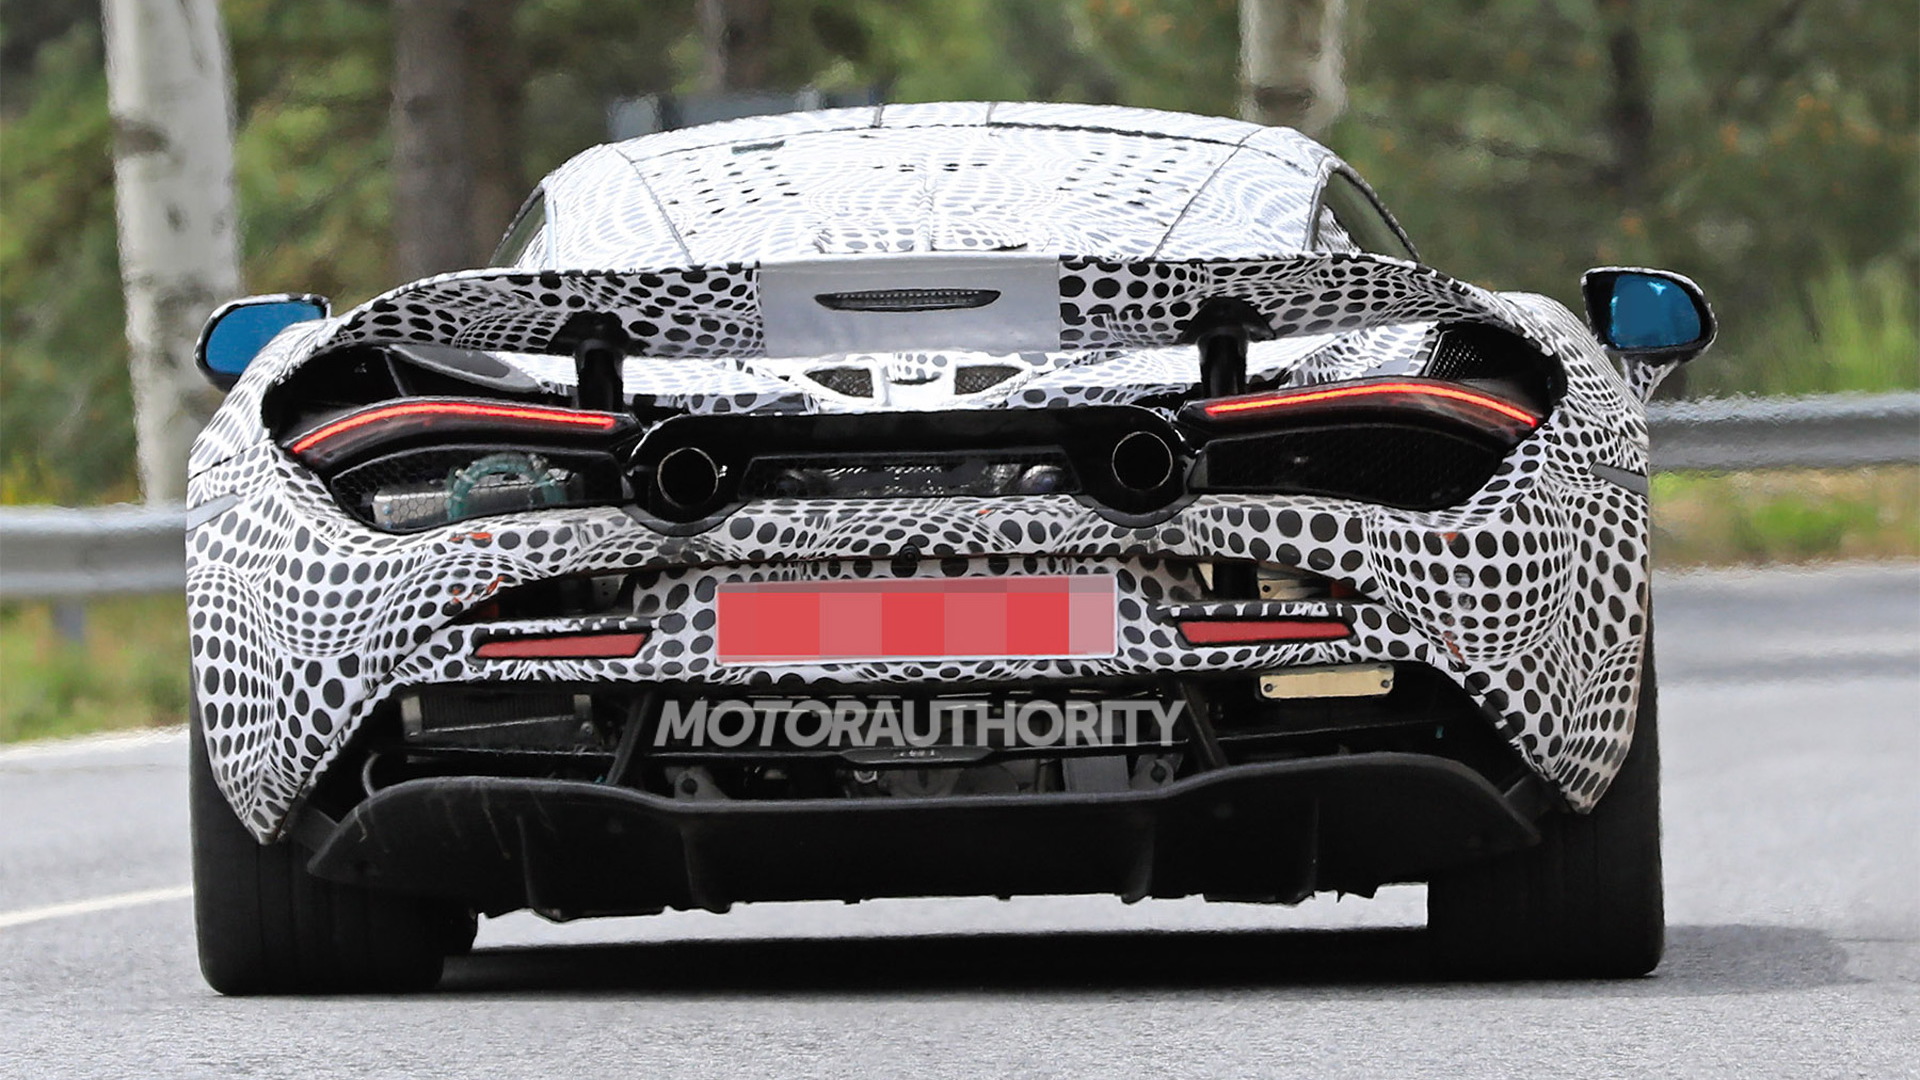 McLaren hybrid test mule spy shots - Image via S. Baldauf/SB-Medien